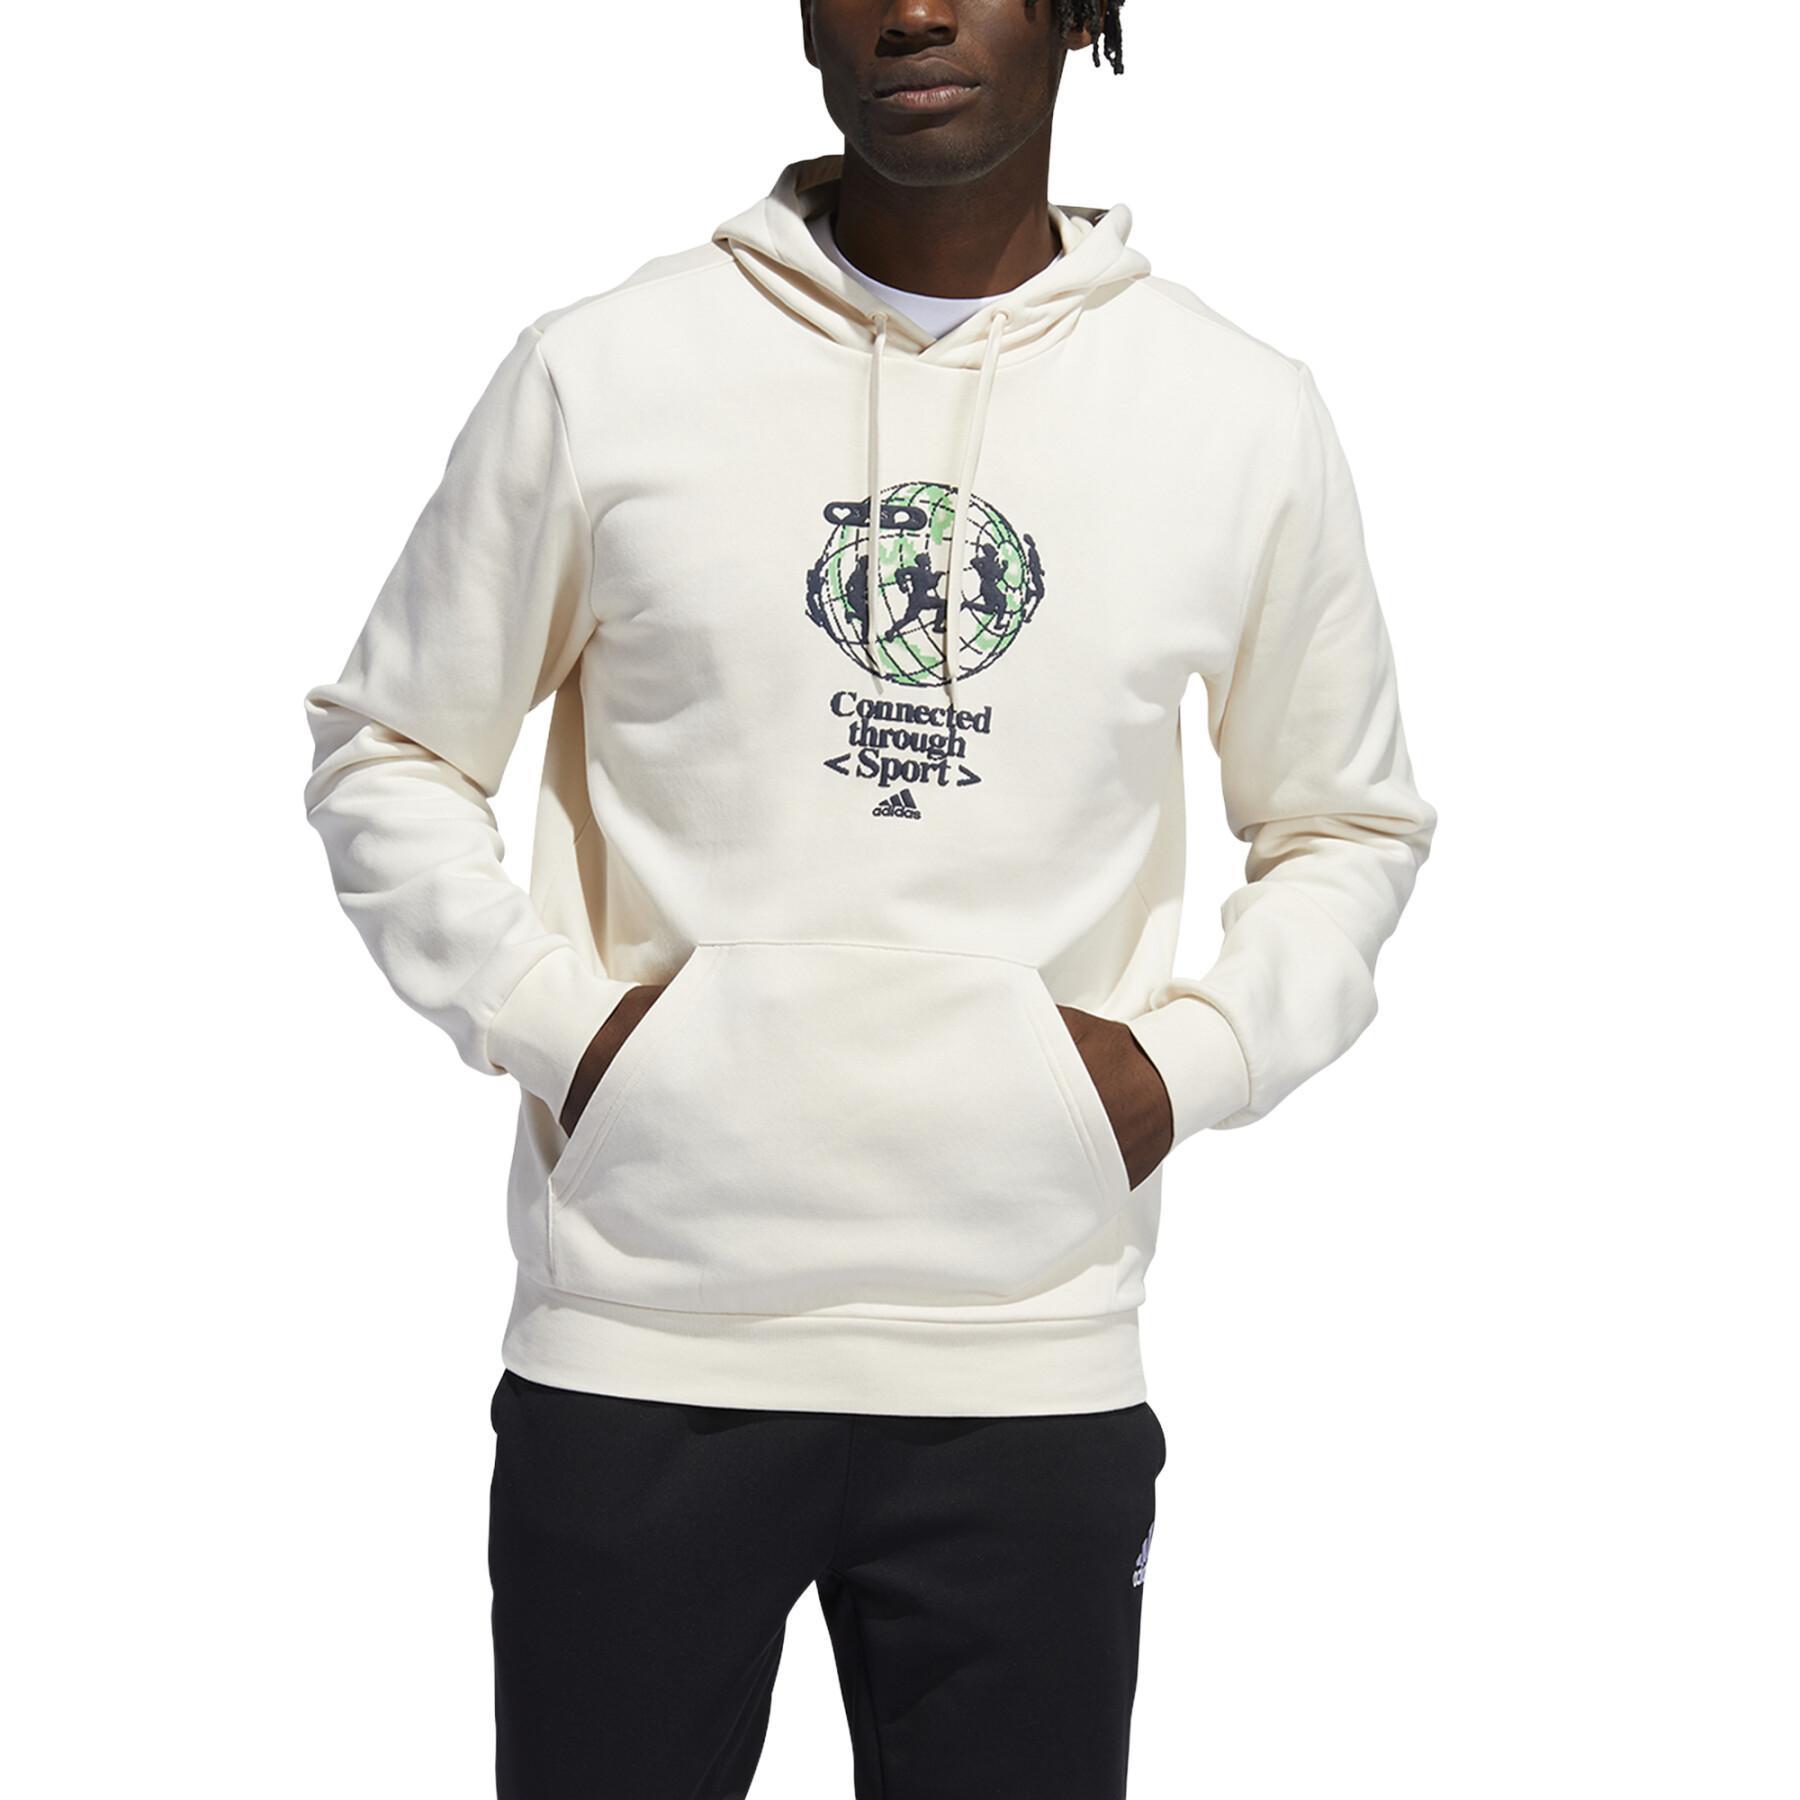 Sweatshirt à capuche adidas Connected Through Sport Graphic